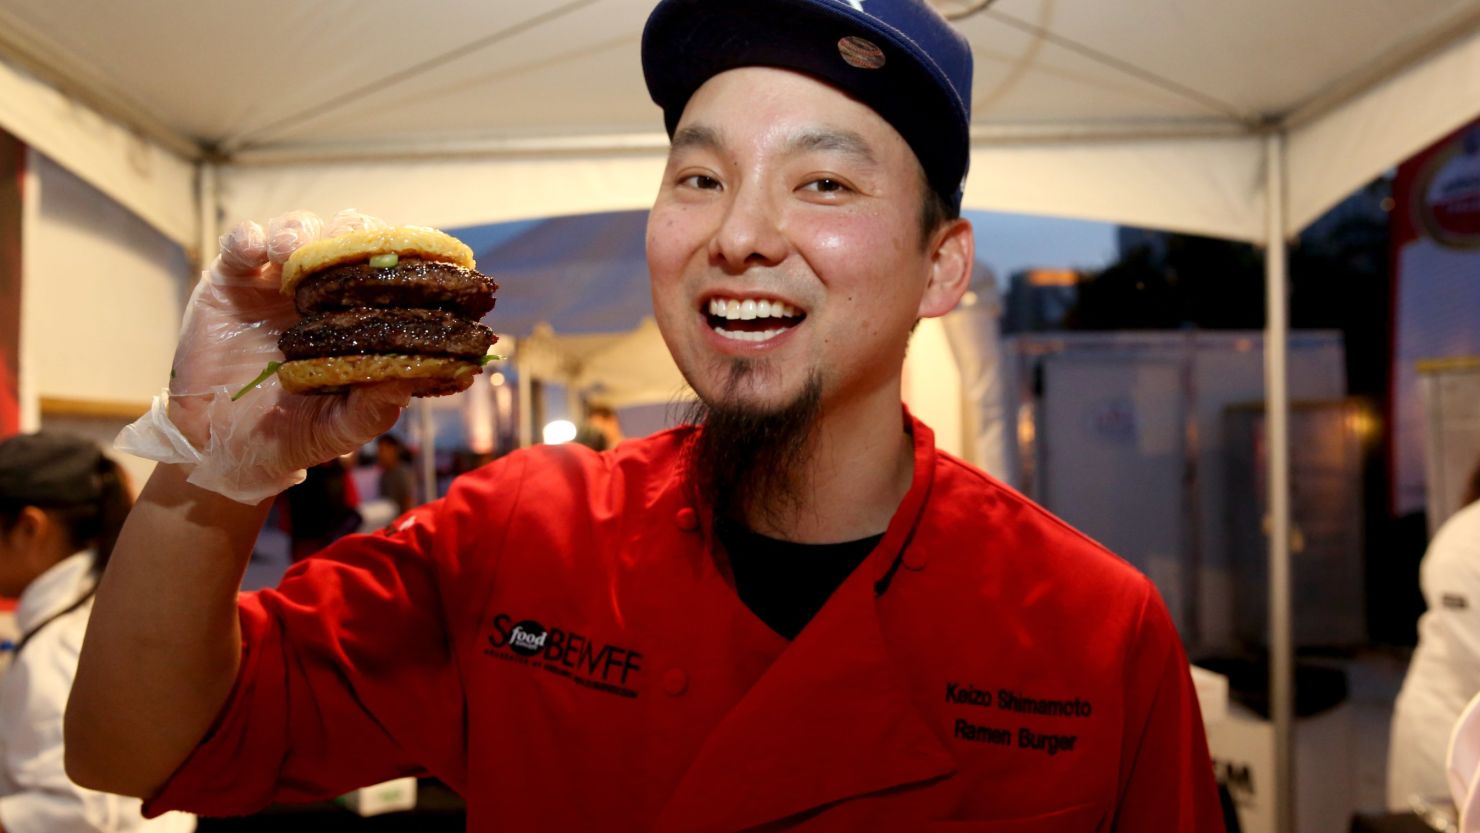 Chef Keizo Shimamoto of Ramen Burger poses with his creation.